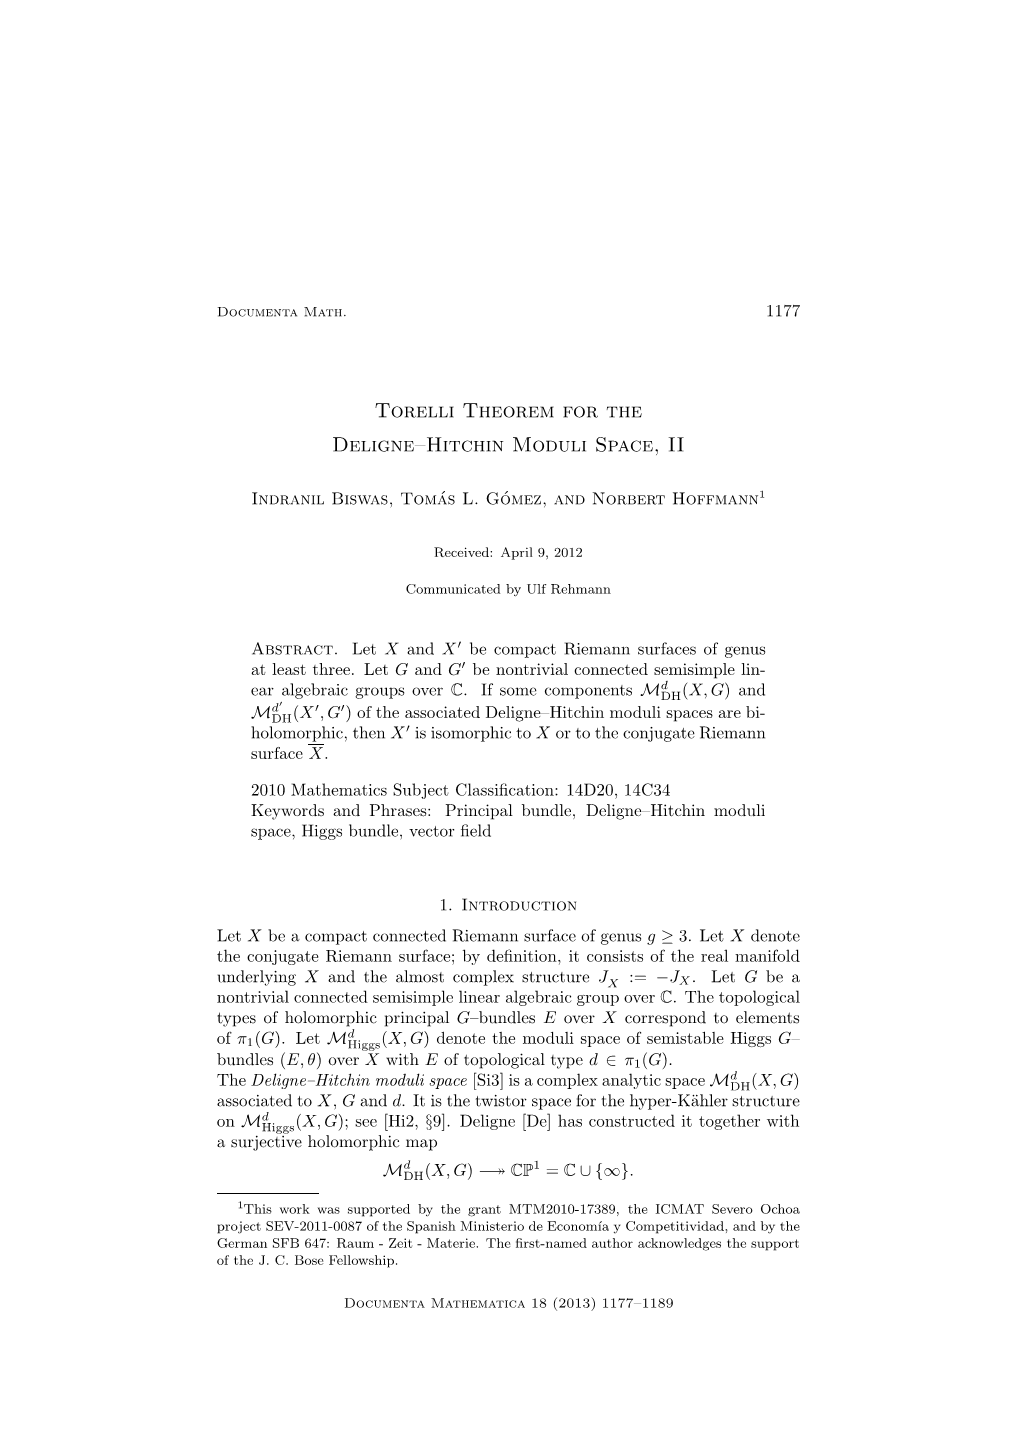 Torelli Theorem for the Deligne–Hitchin Moduli Space, II